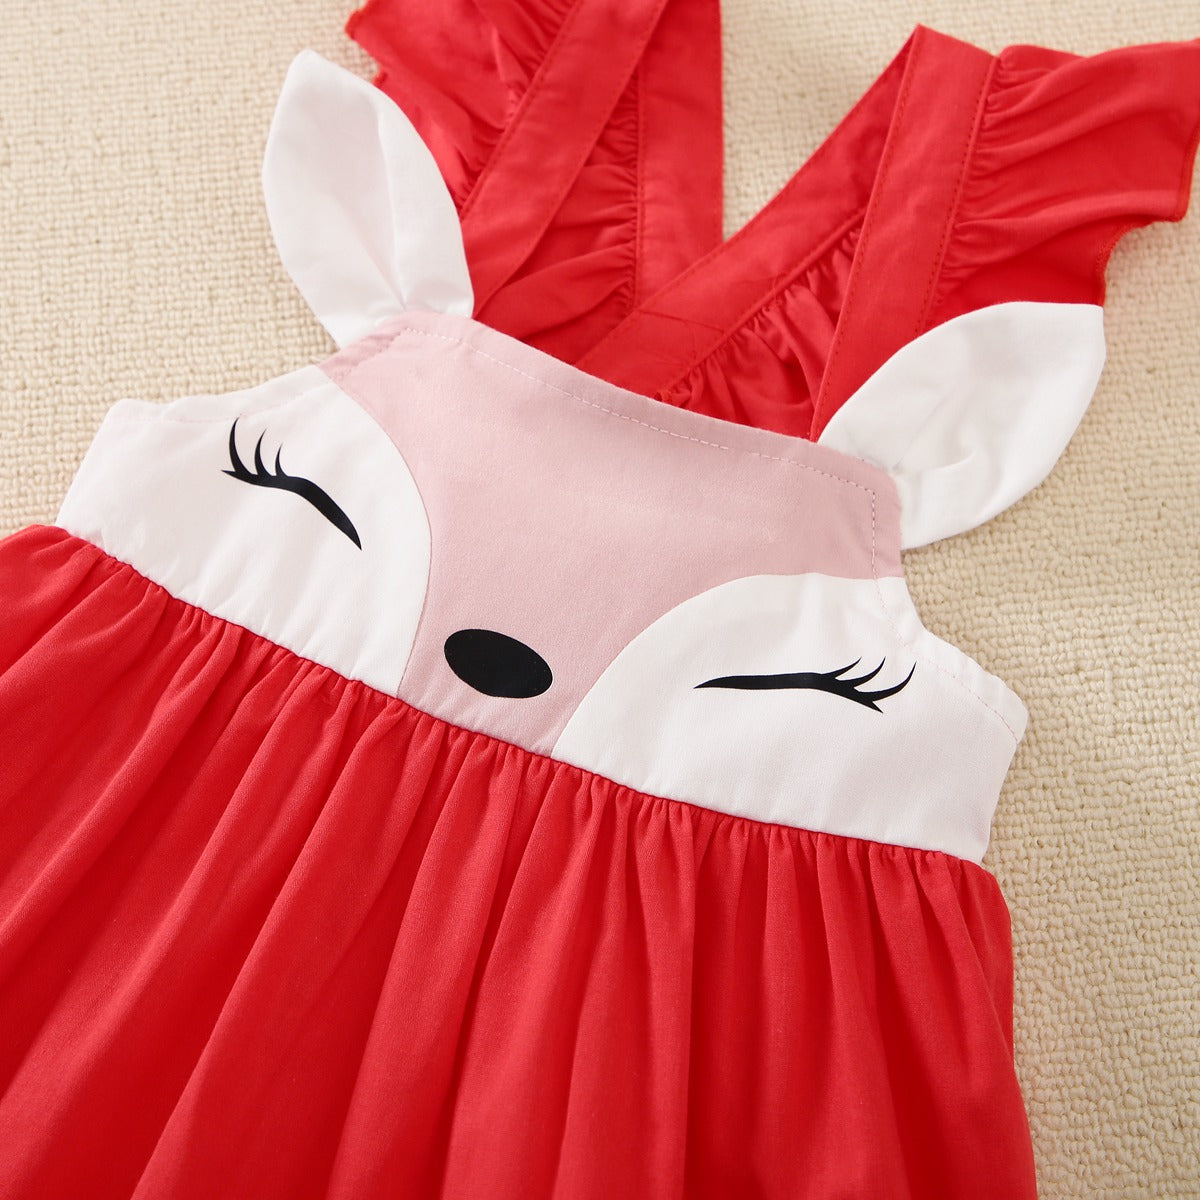 Mayoreo Girl Baby Cute Deer Fly manga correa vestidos rojo 9-12 M